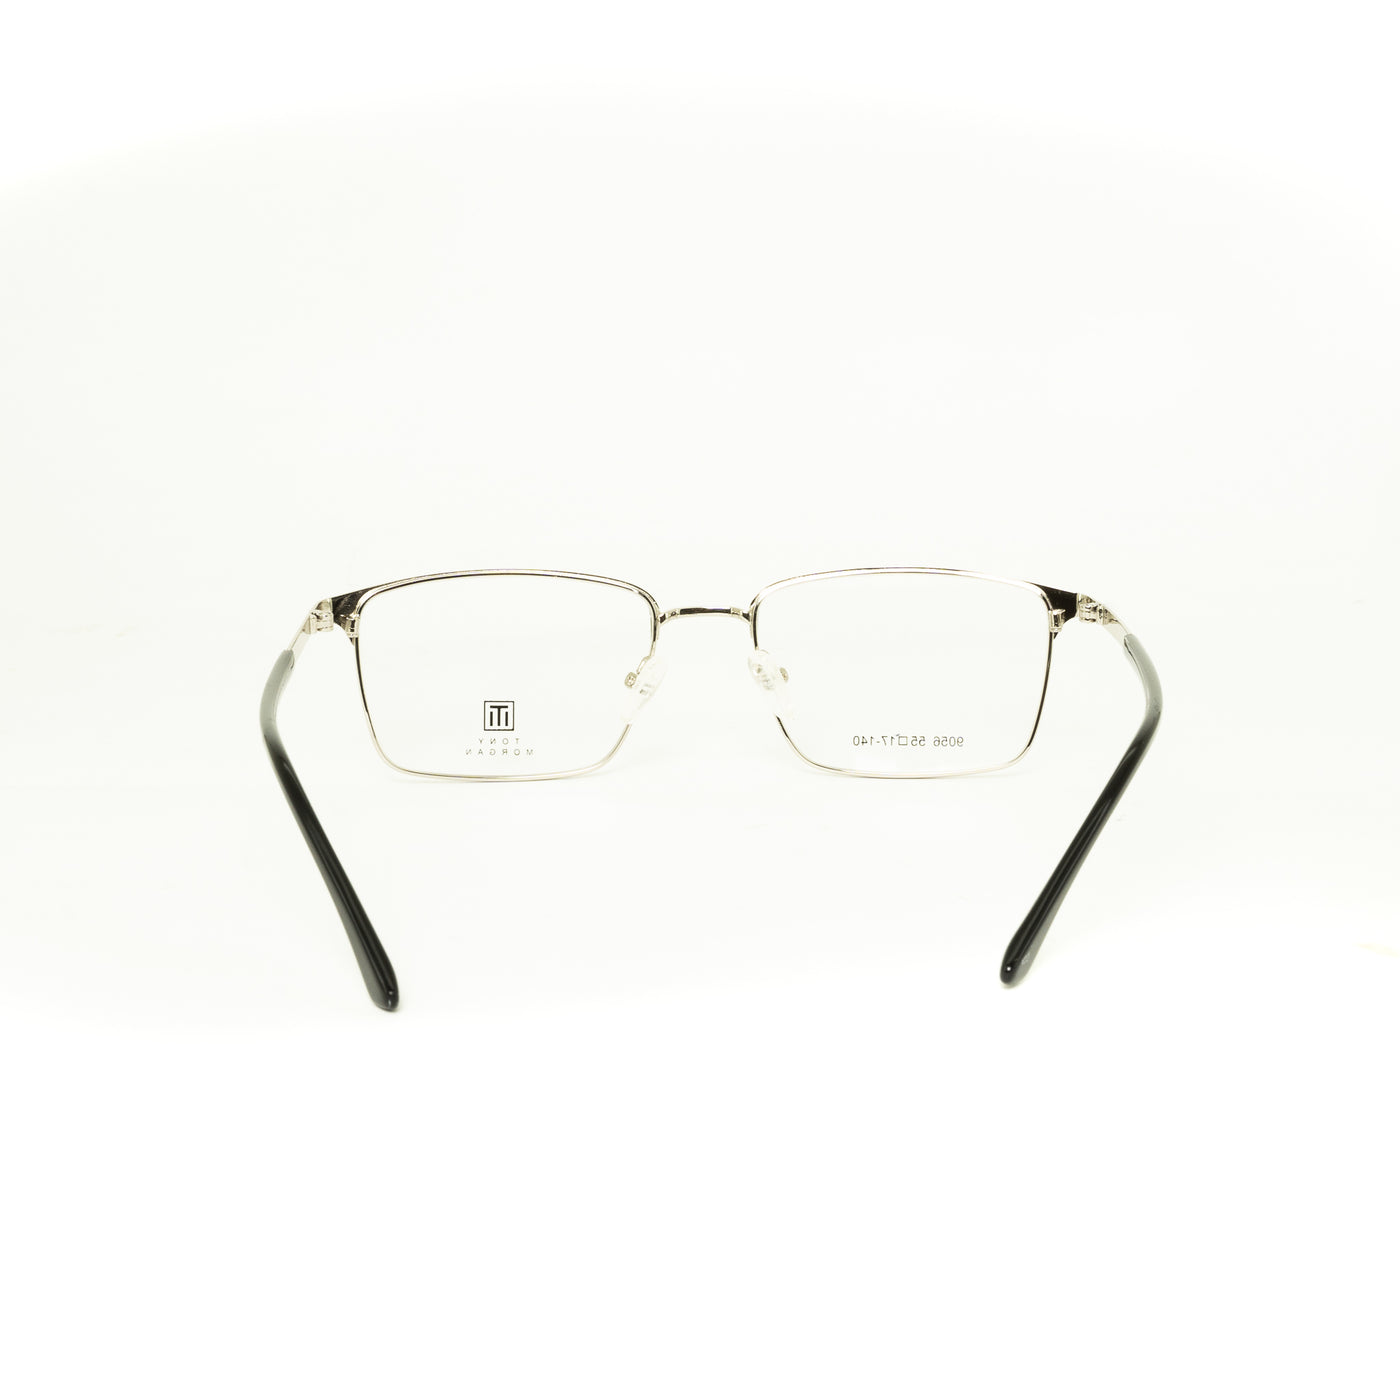 Tony Morgan London TM WYATT/C5 | Eyeglasses - Vision Express Optical Philippines